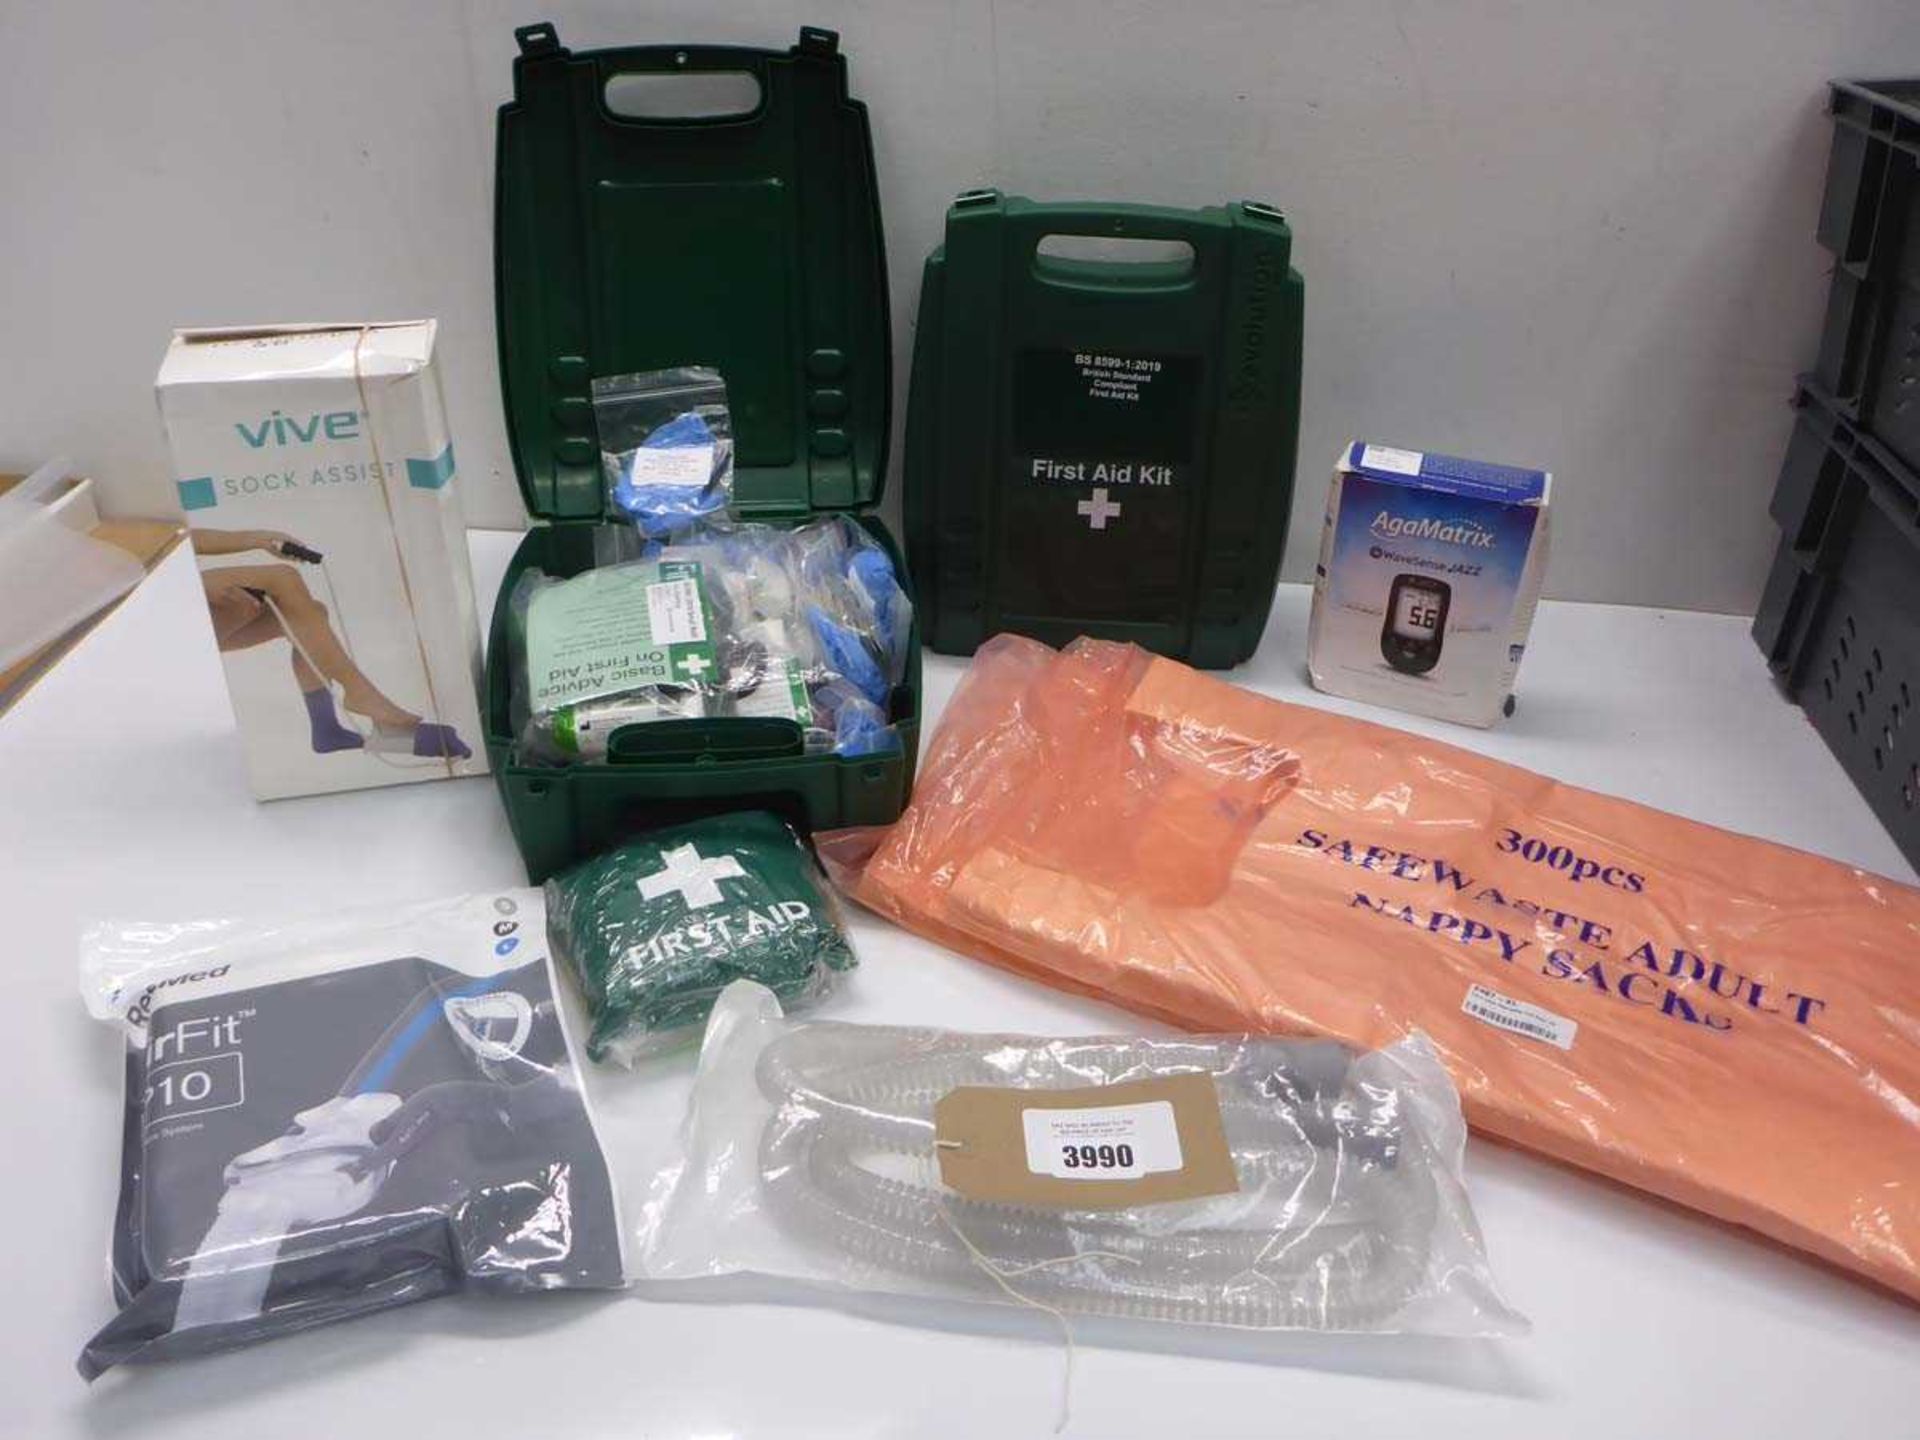 +VAT 3 First Aid kits, ResMed AirFit P10 nasal mask, Vive sock assist, AgaMatrix blood glucose